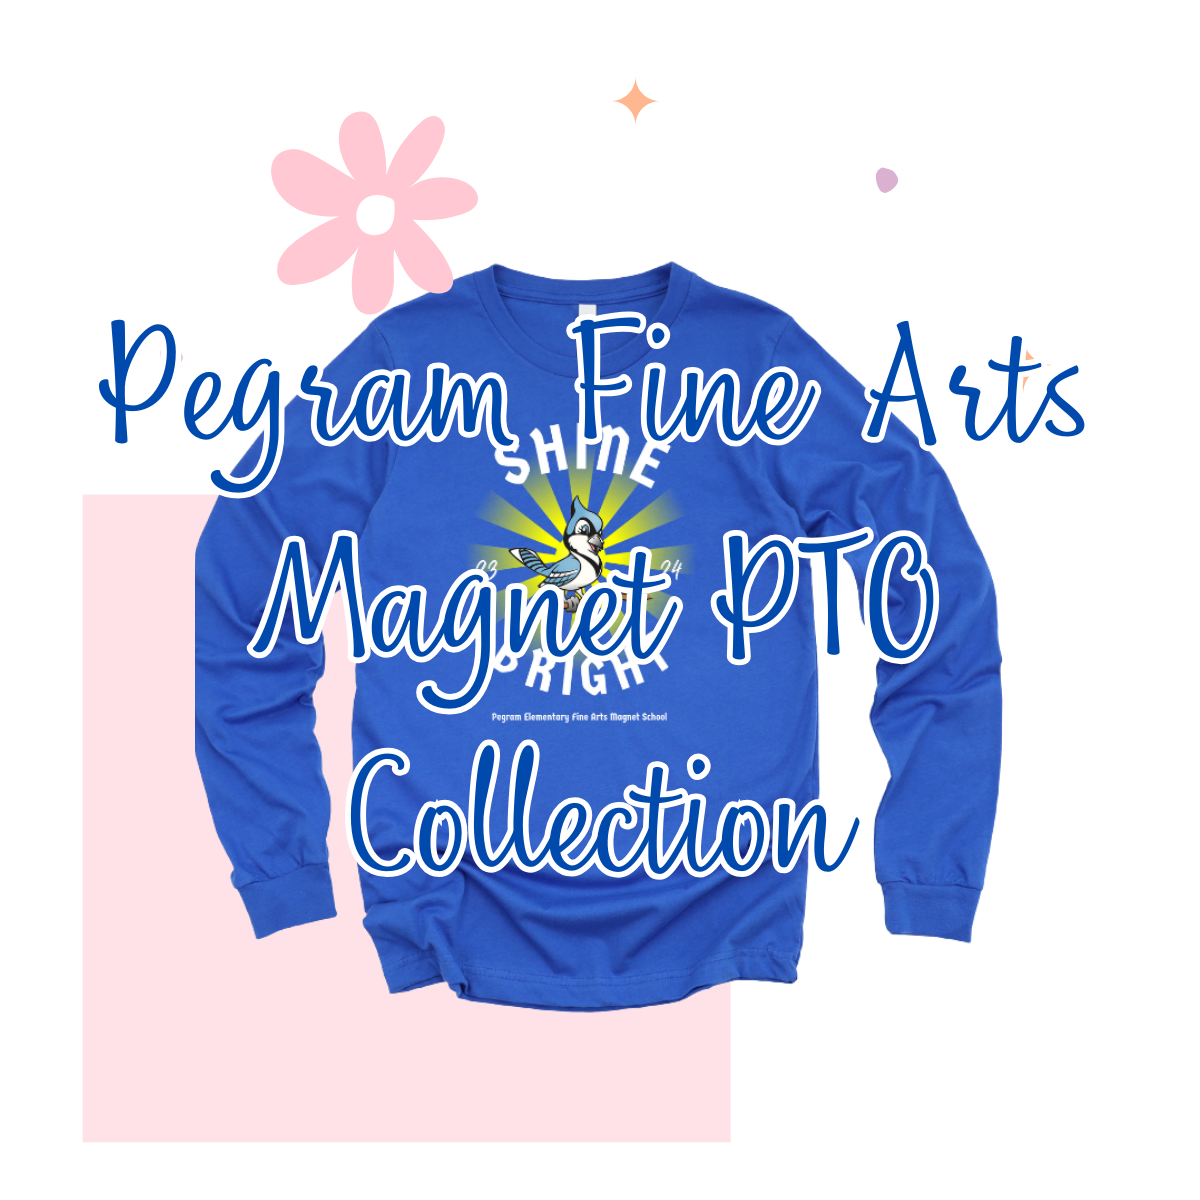 Pegram Fine Arts Magnet PTO Collection